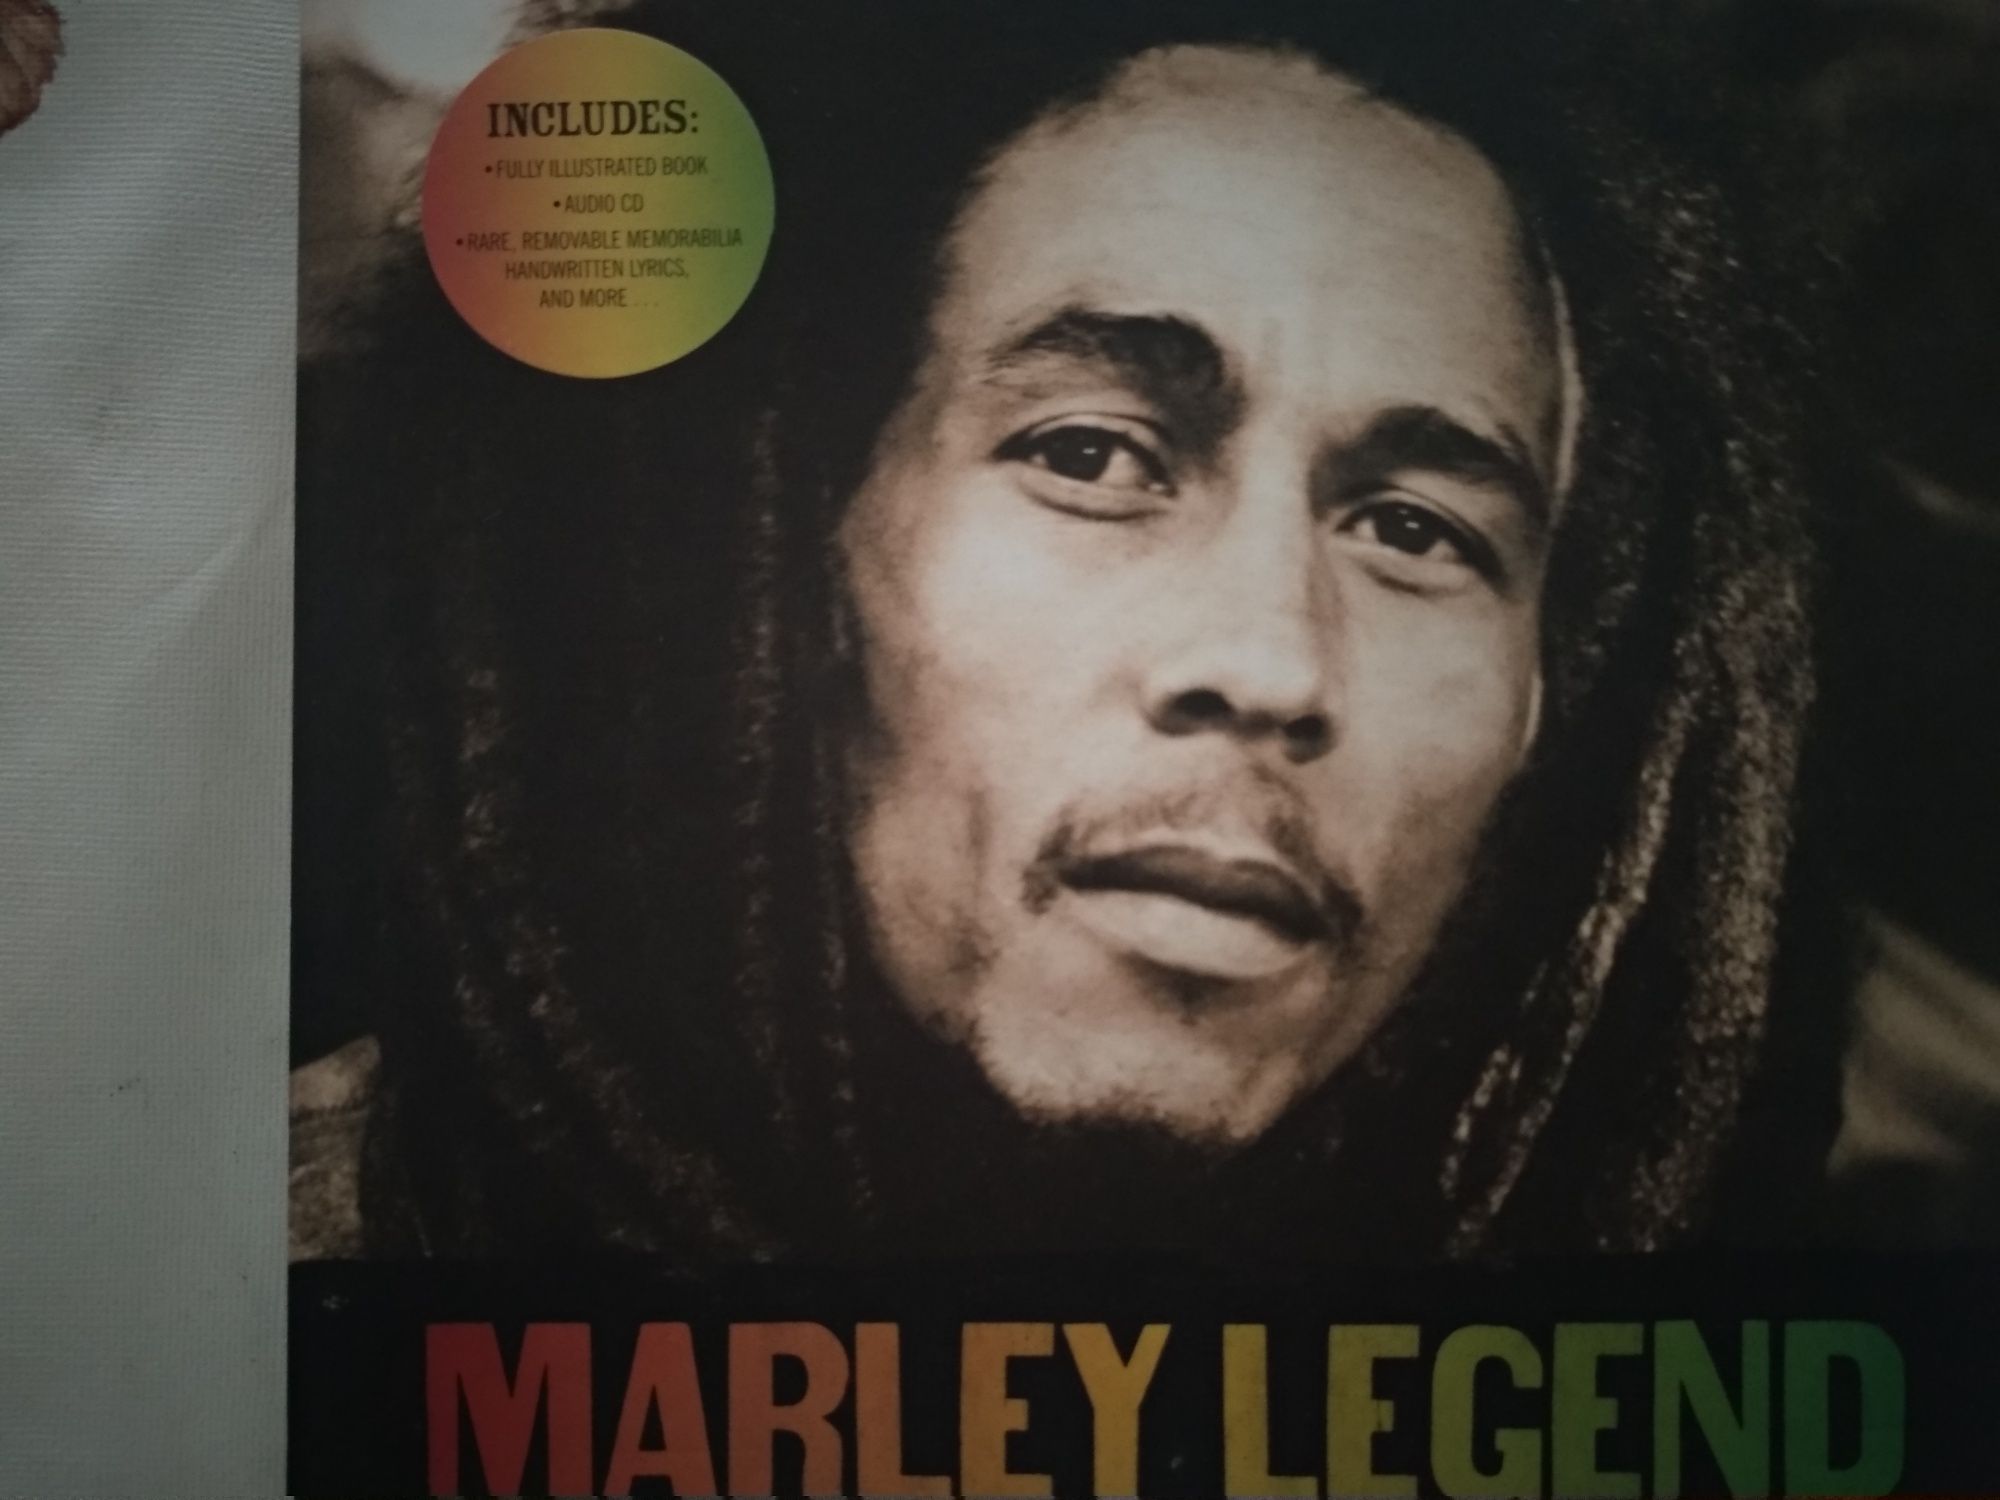 Livro - Marley Legend - An Illustrated Life of Bob Marley
James Henke